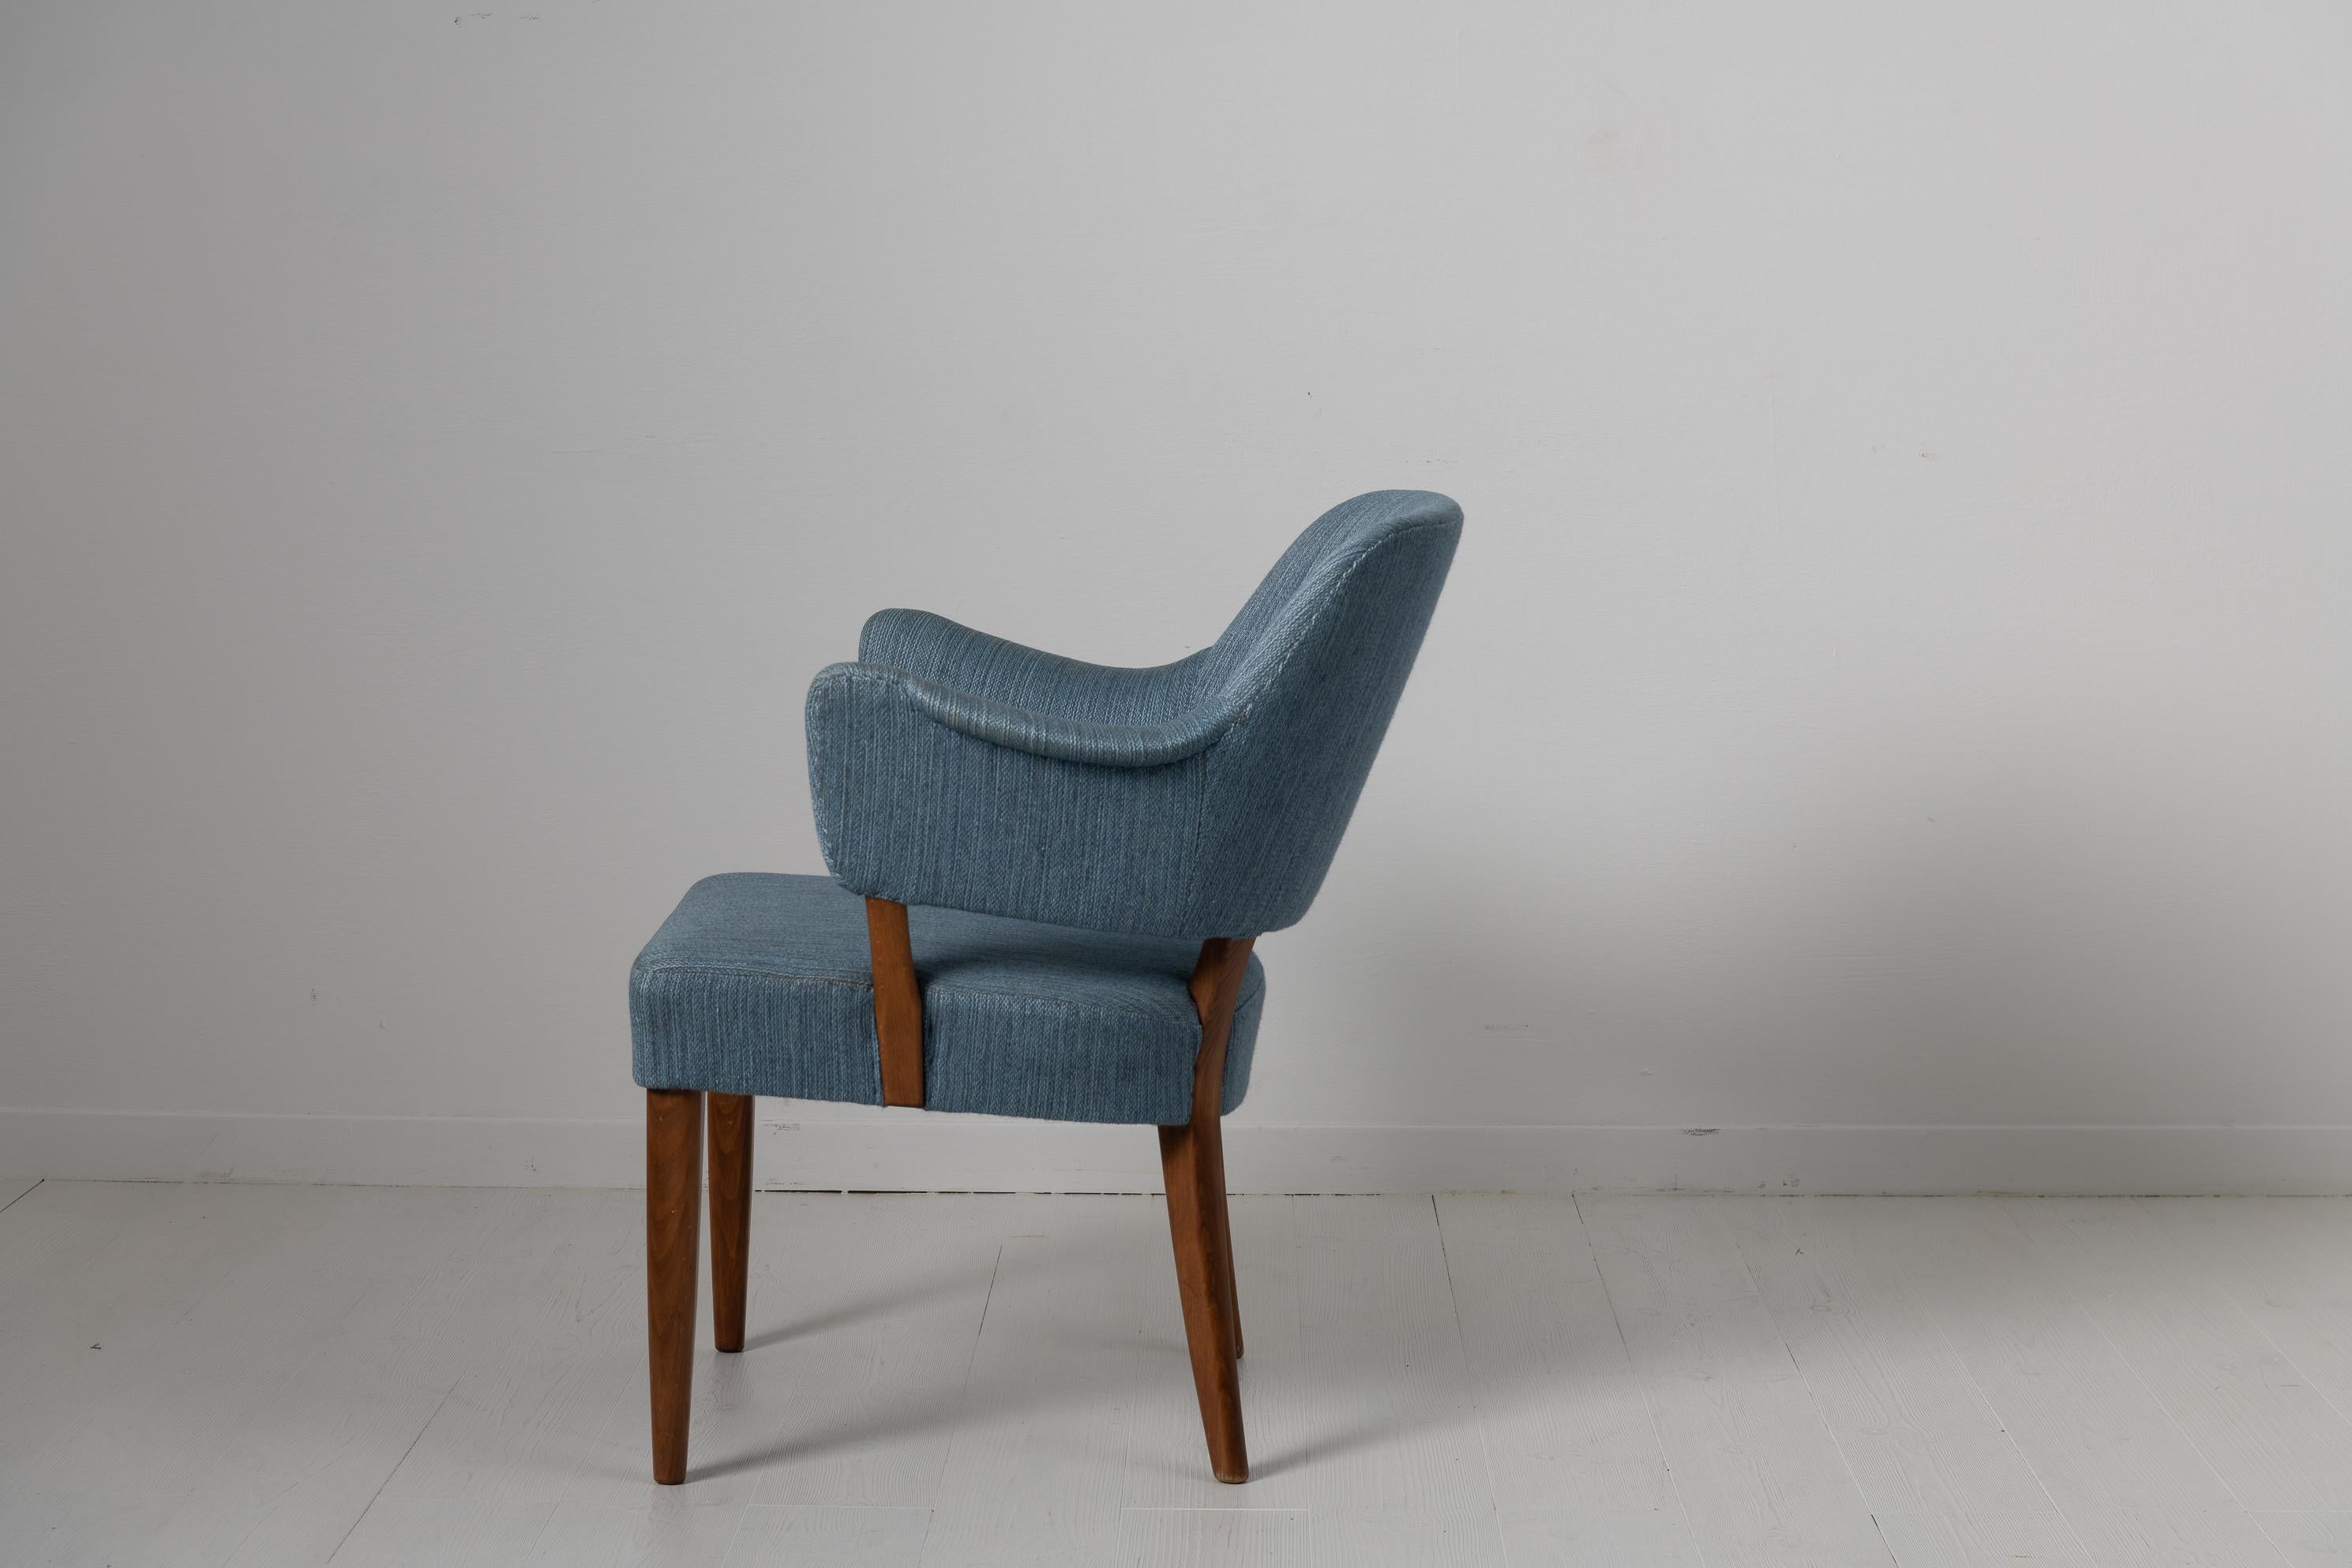 20th Century Scandinavian Modern Carl Malmsten ”Lata Greven” Chair